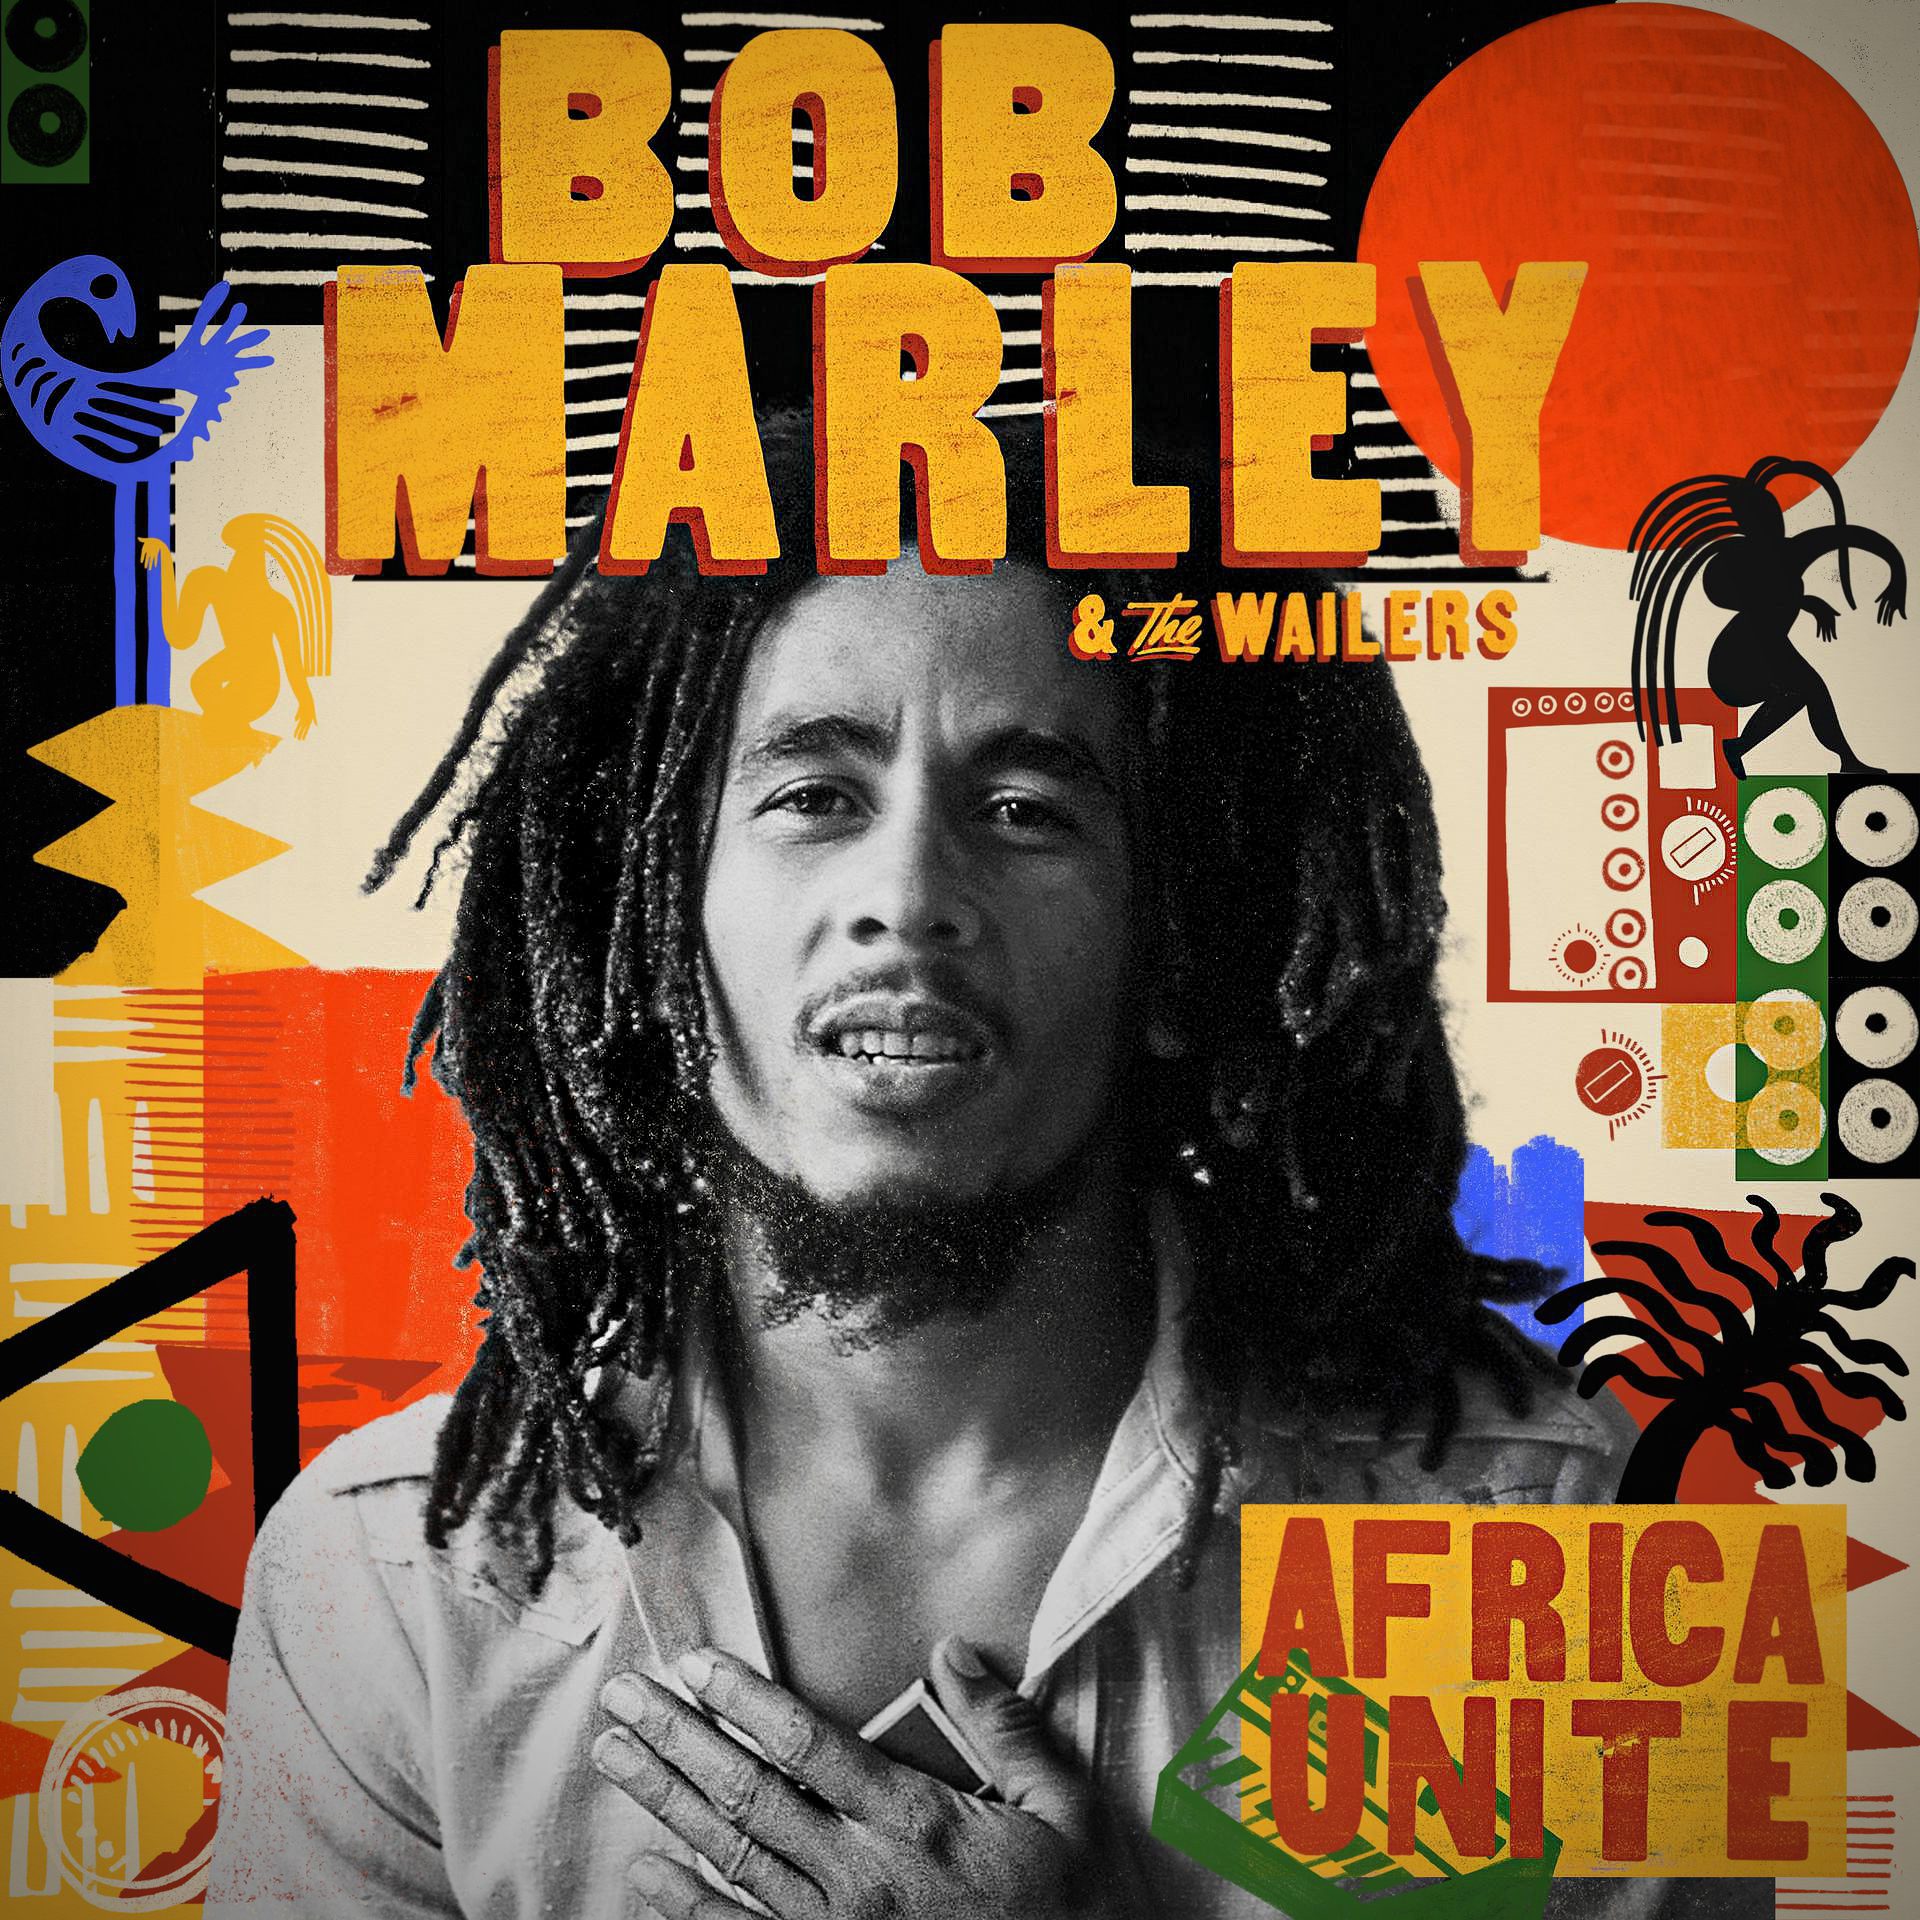 Bob Marley & The Wailers release Africa Unite via 360 MAGAZINE.